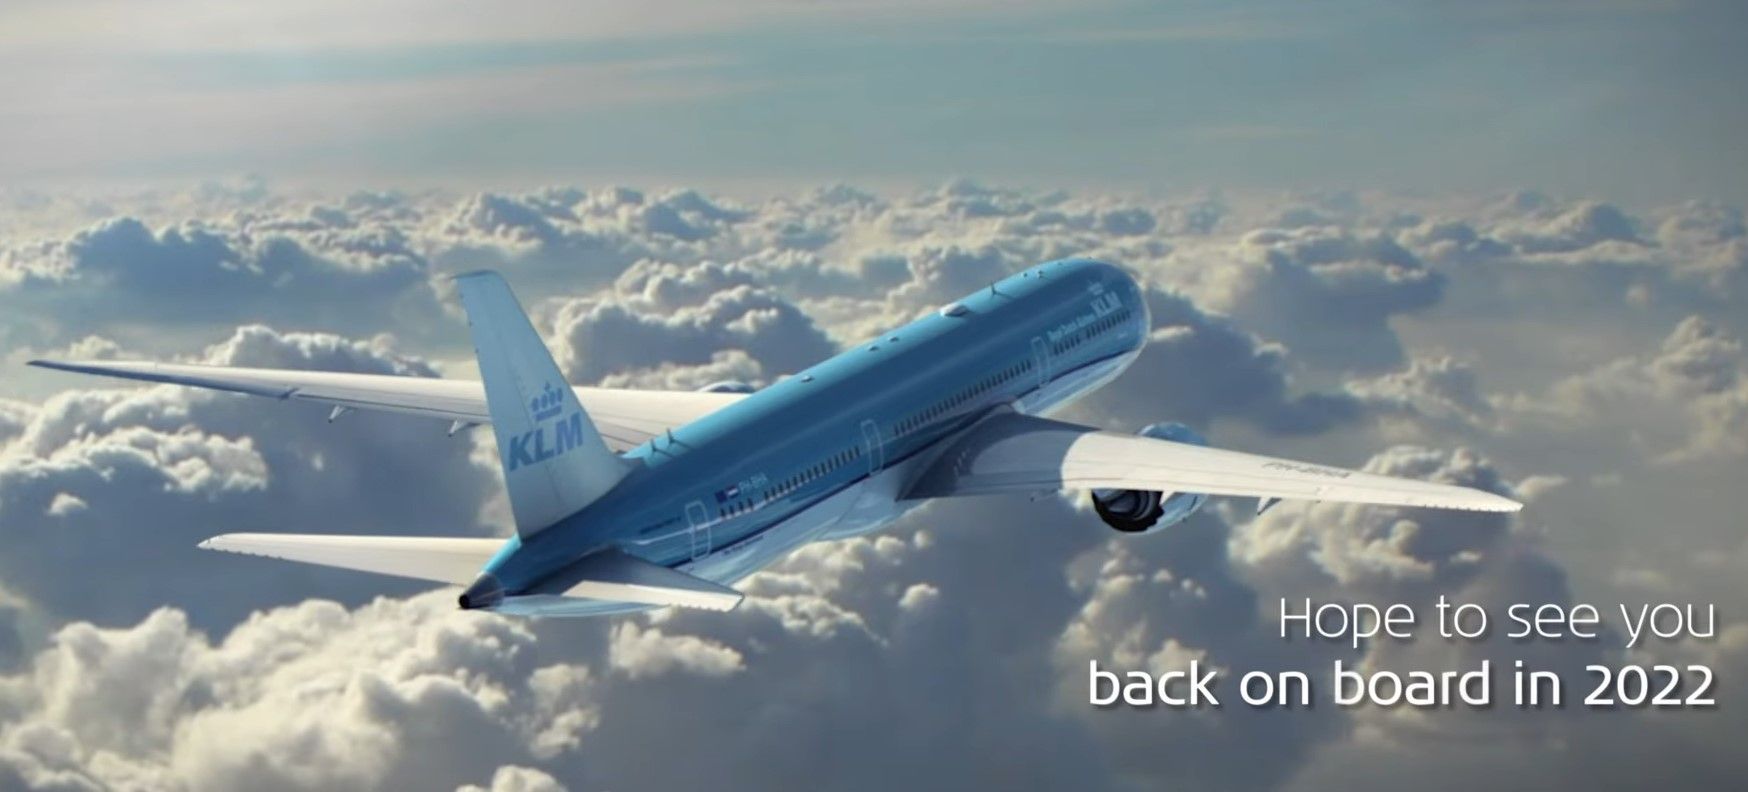 Фото – скриншот YouTube / KLM Royal Dutch Airlines